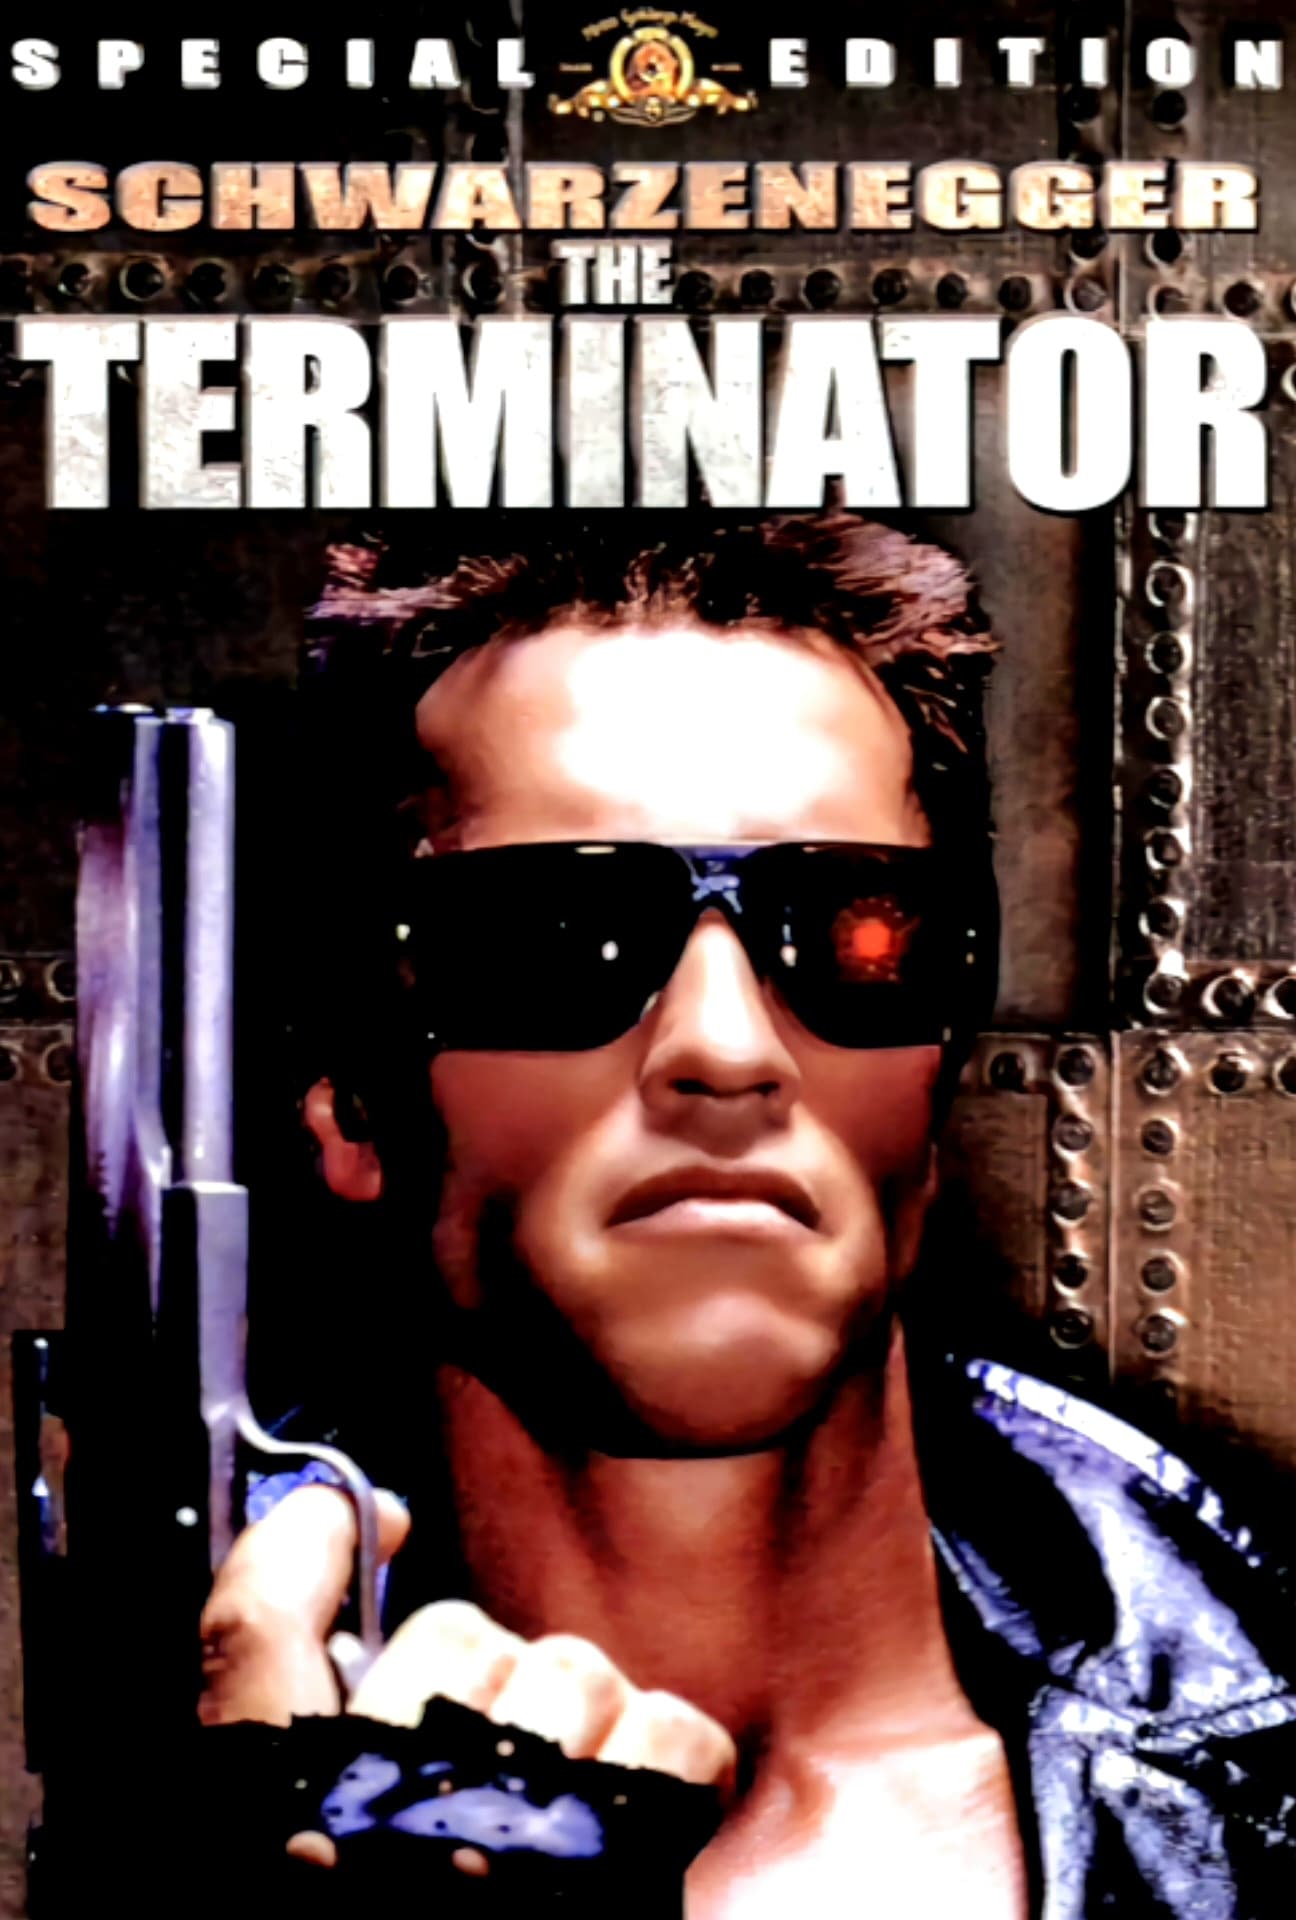 The Terminator Movie poster